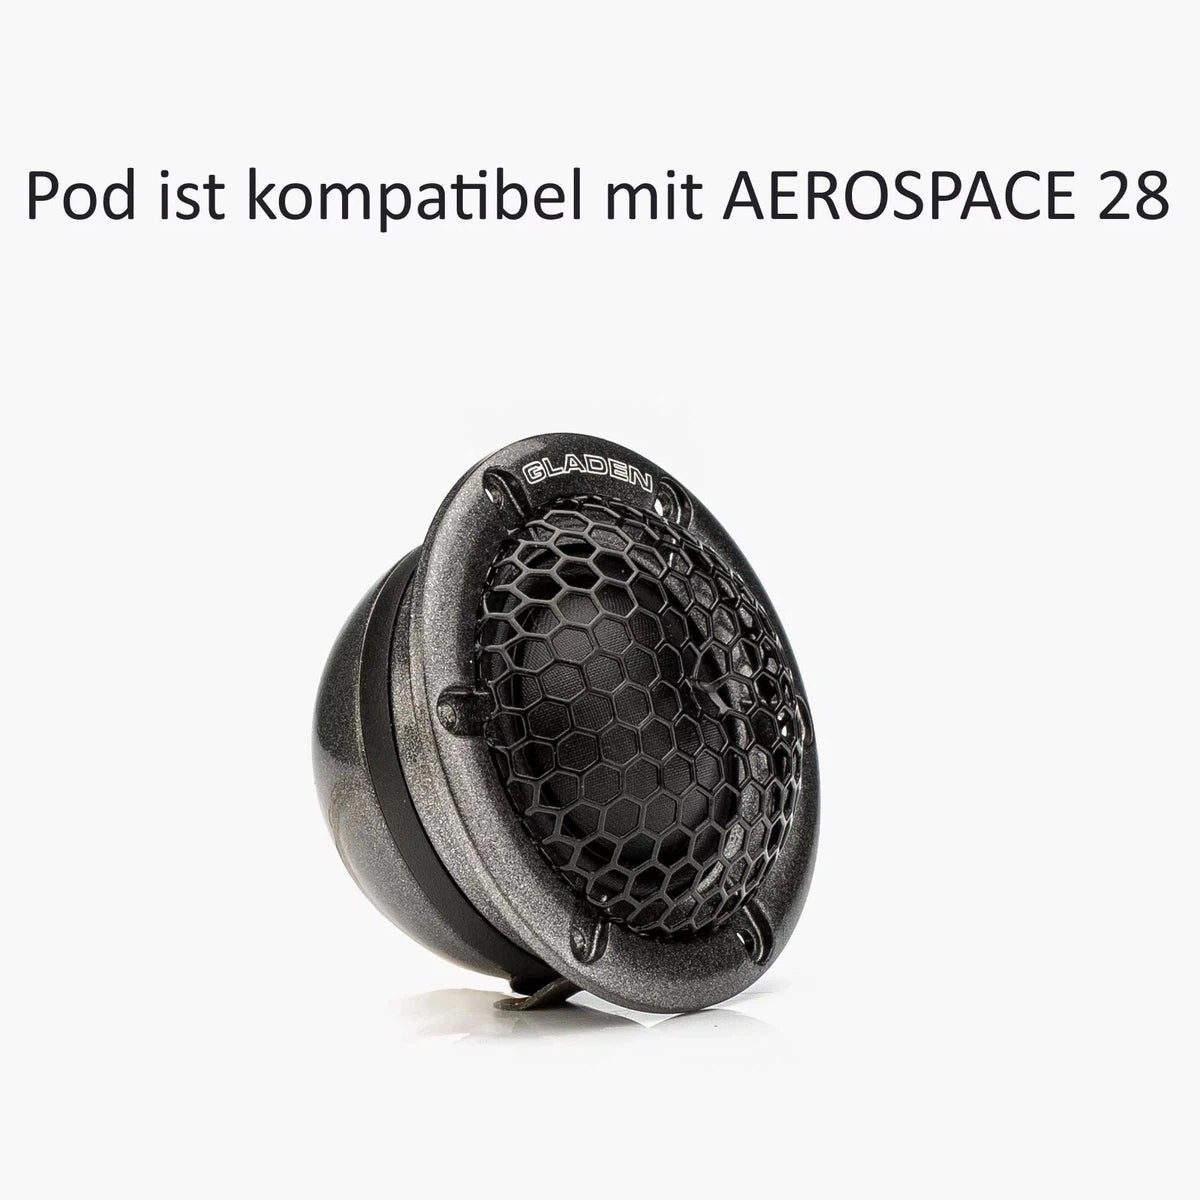 Gladen-Aerospace POD 28-Hochtonkapsel-Masori.de